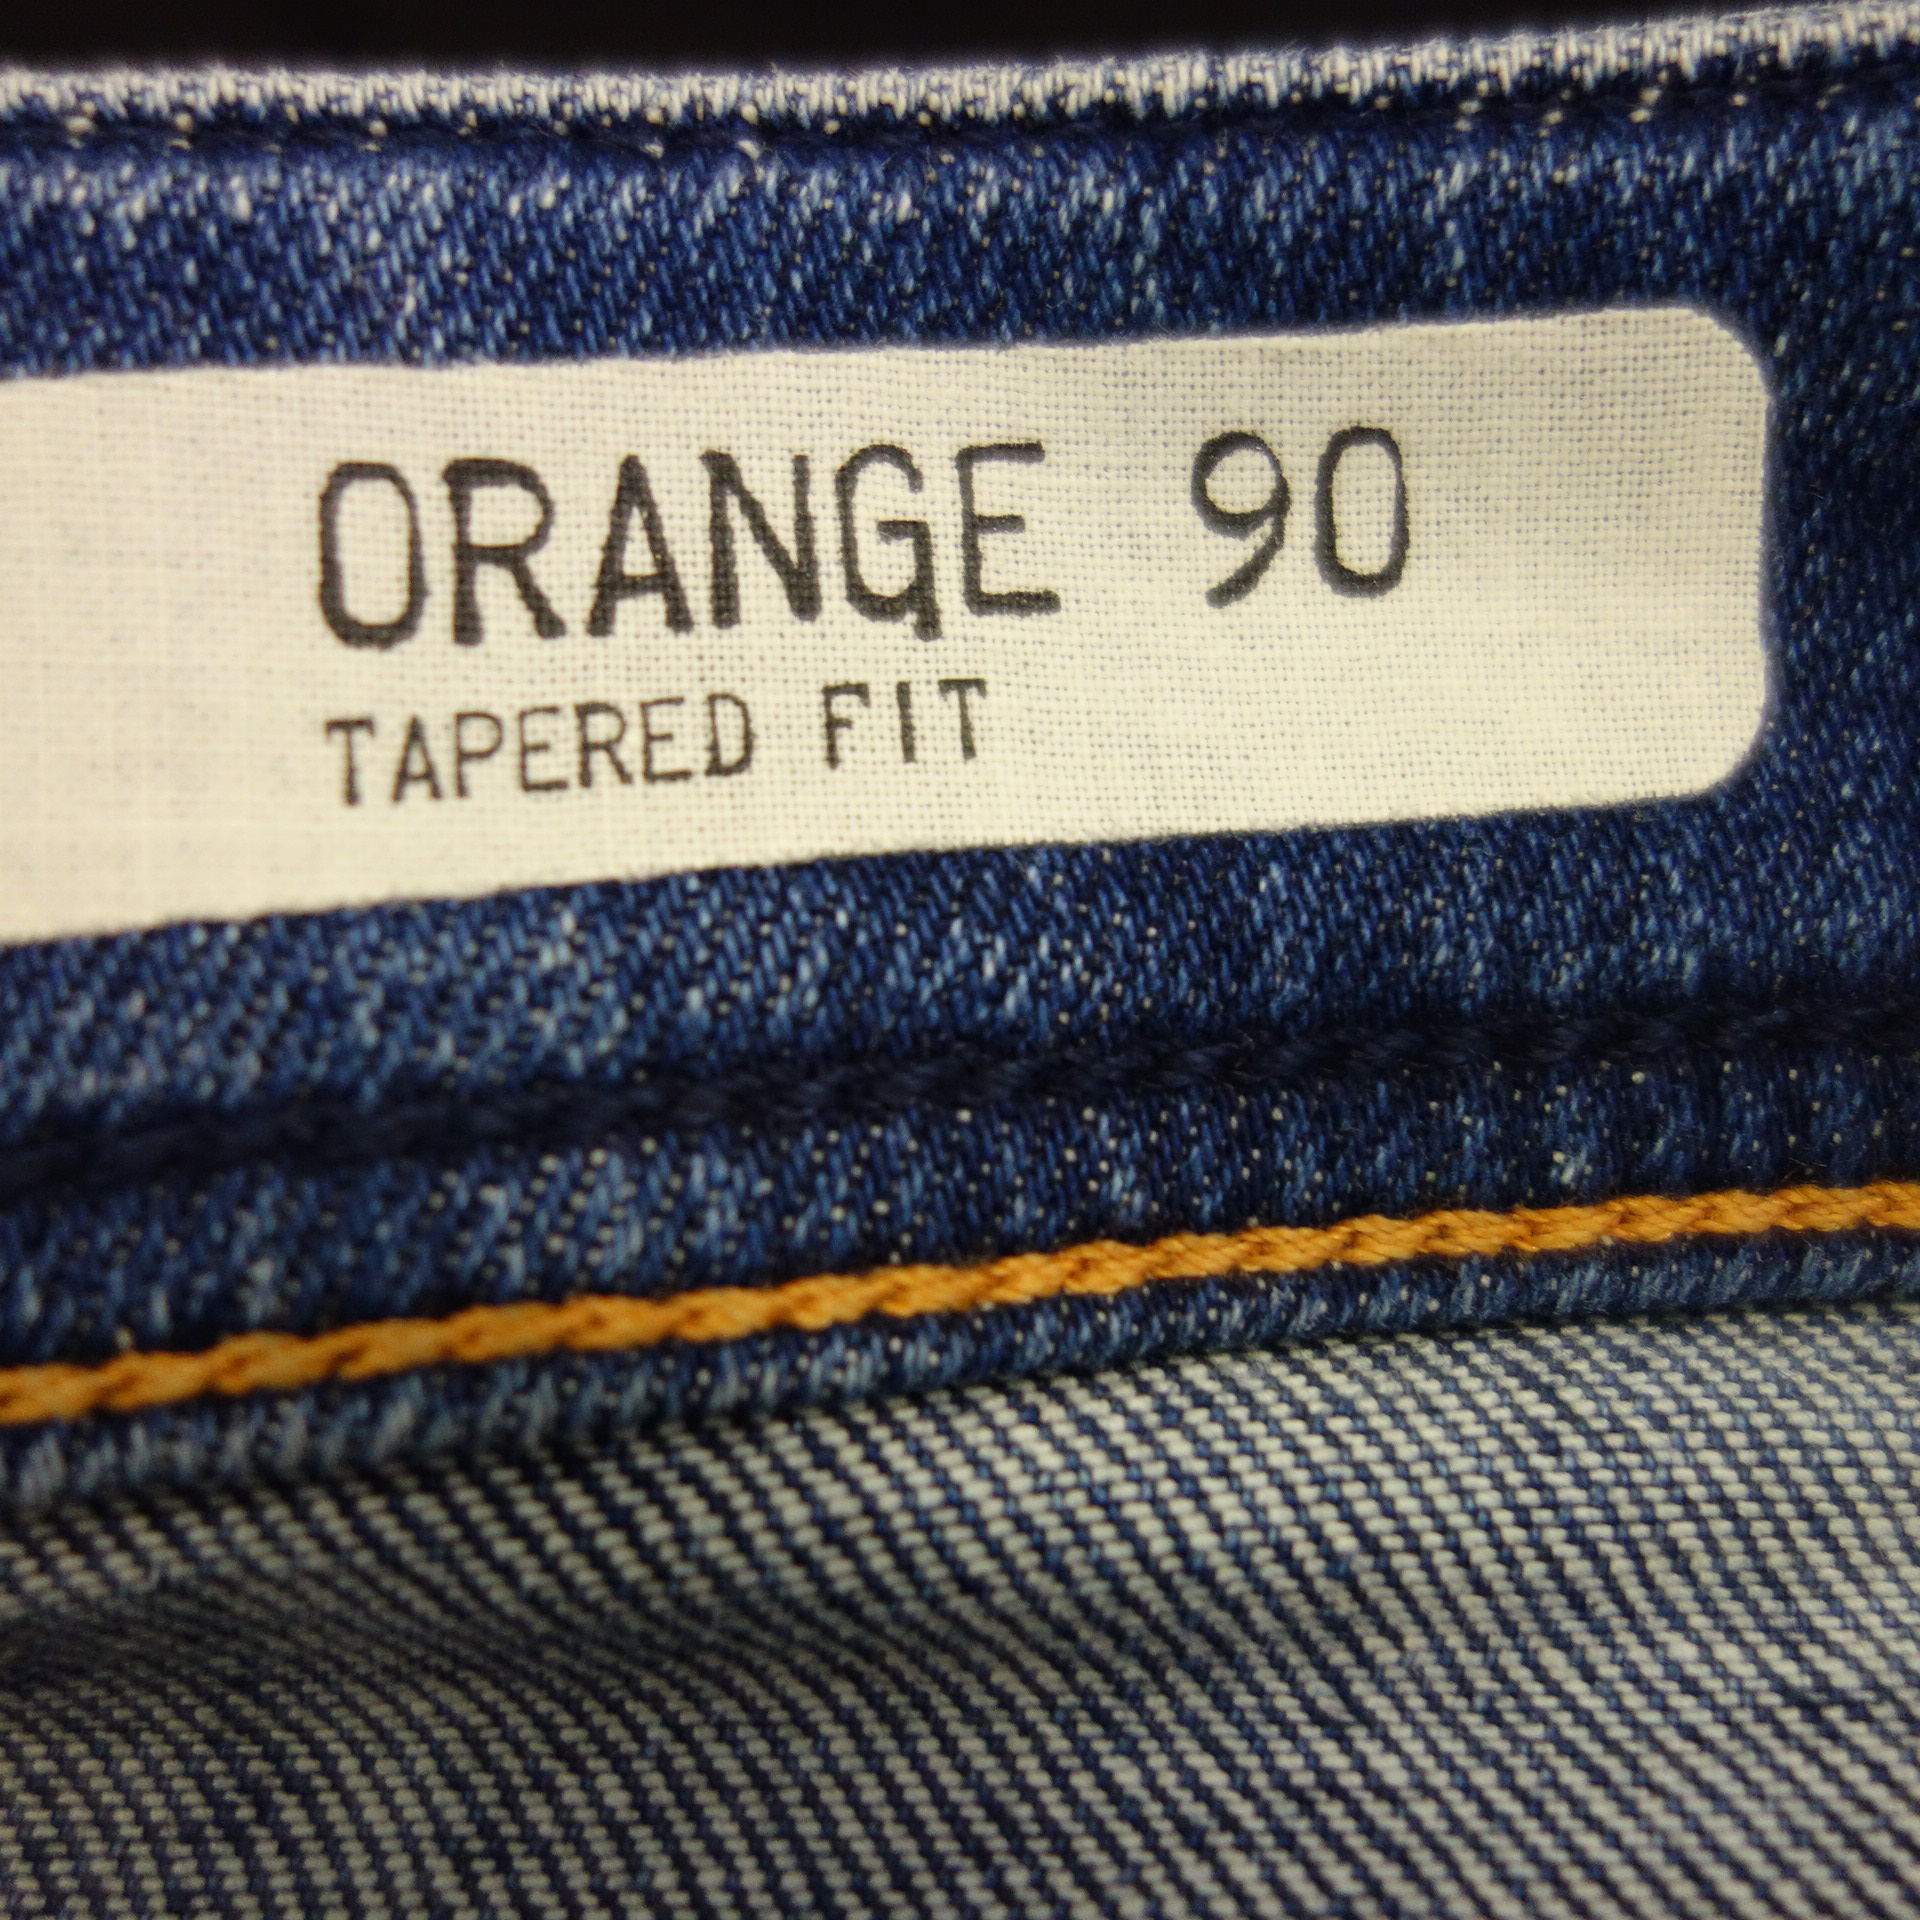 HUGO BOSS Herren Jeans Hose Jeanshose Blau Orange 90 Manana Tapered Fit 